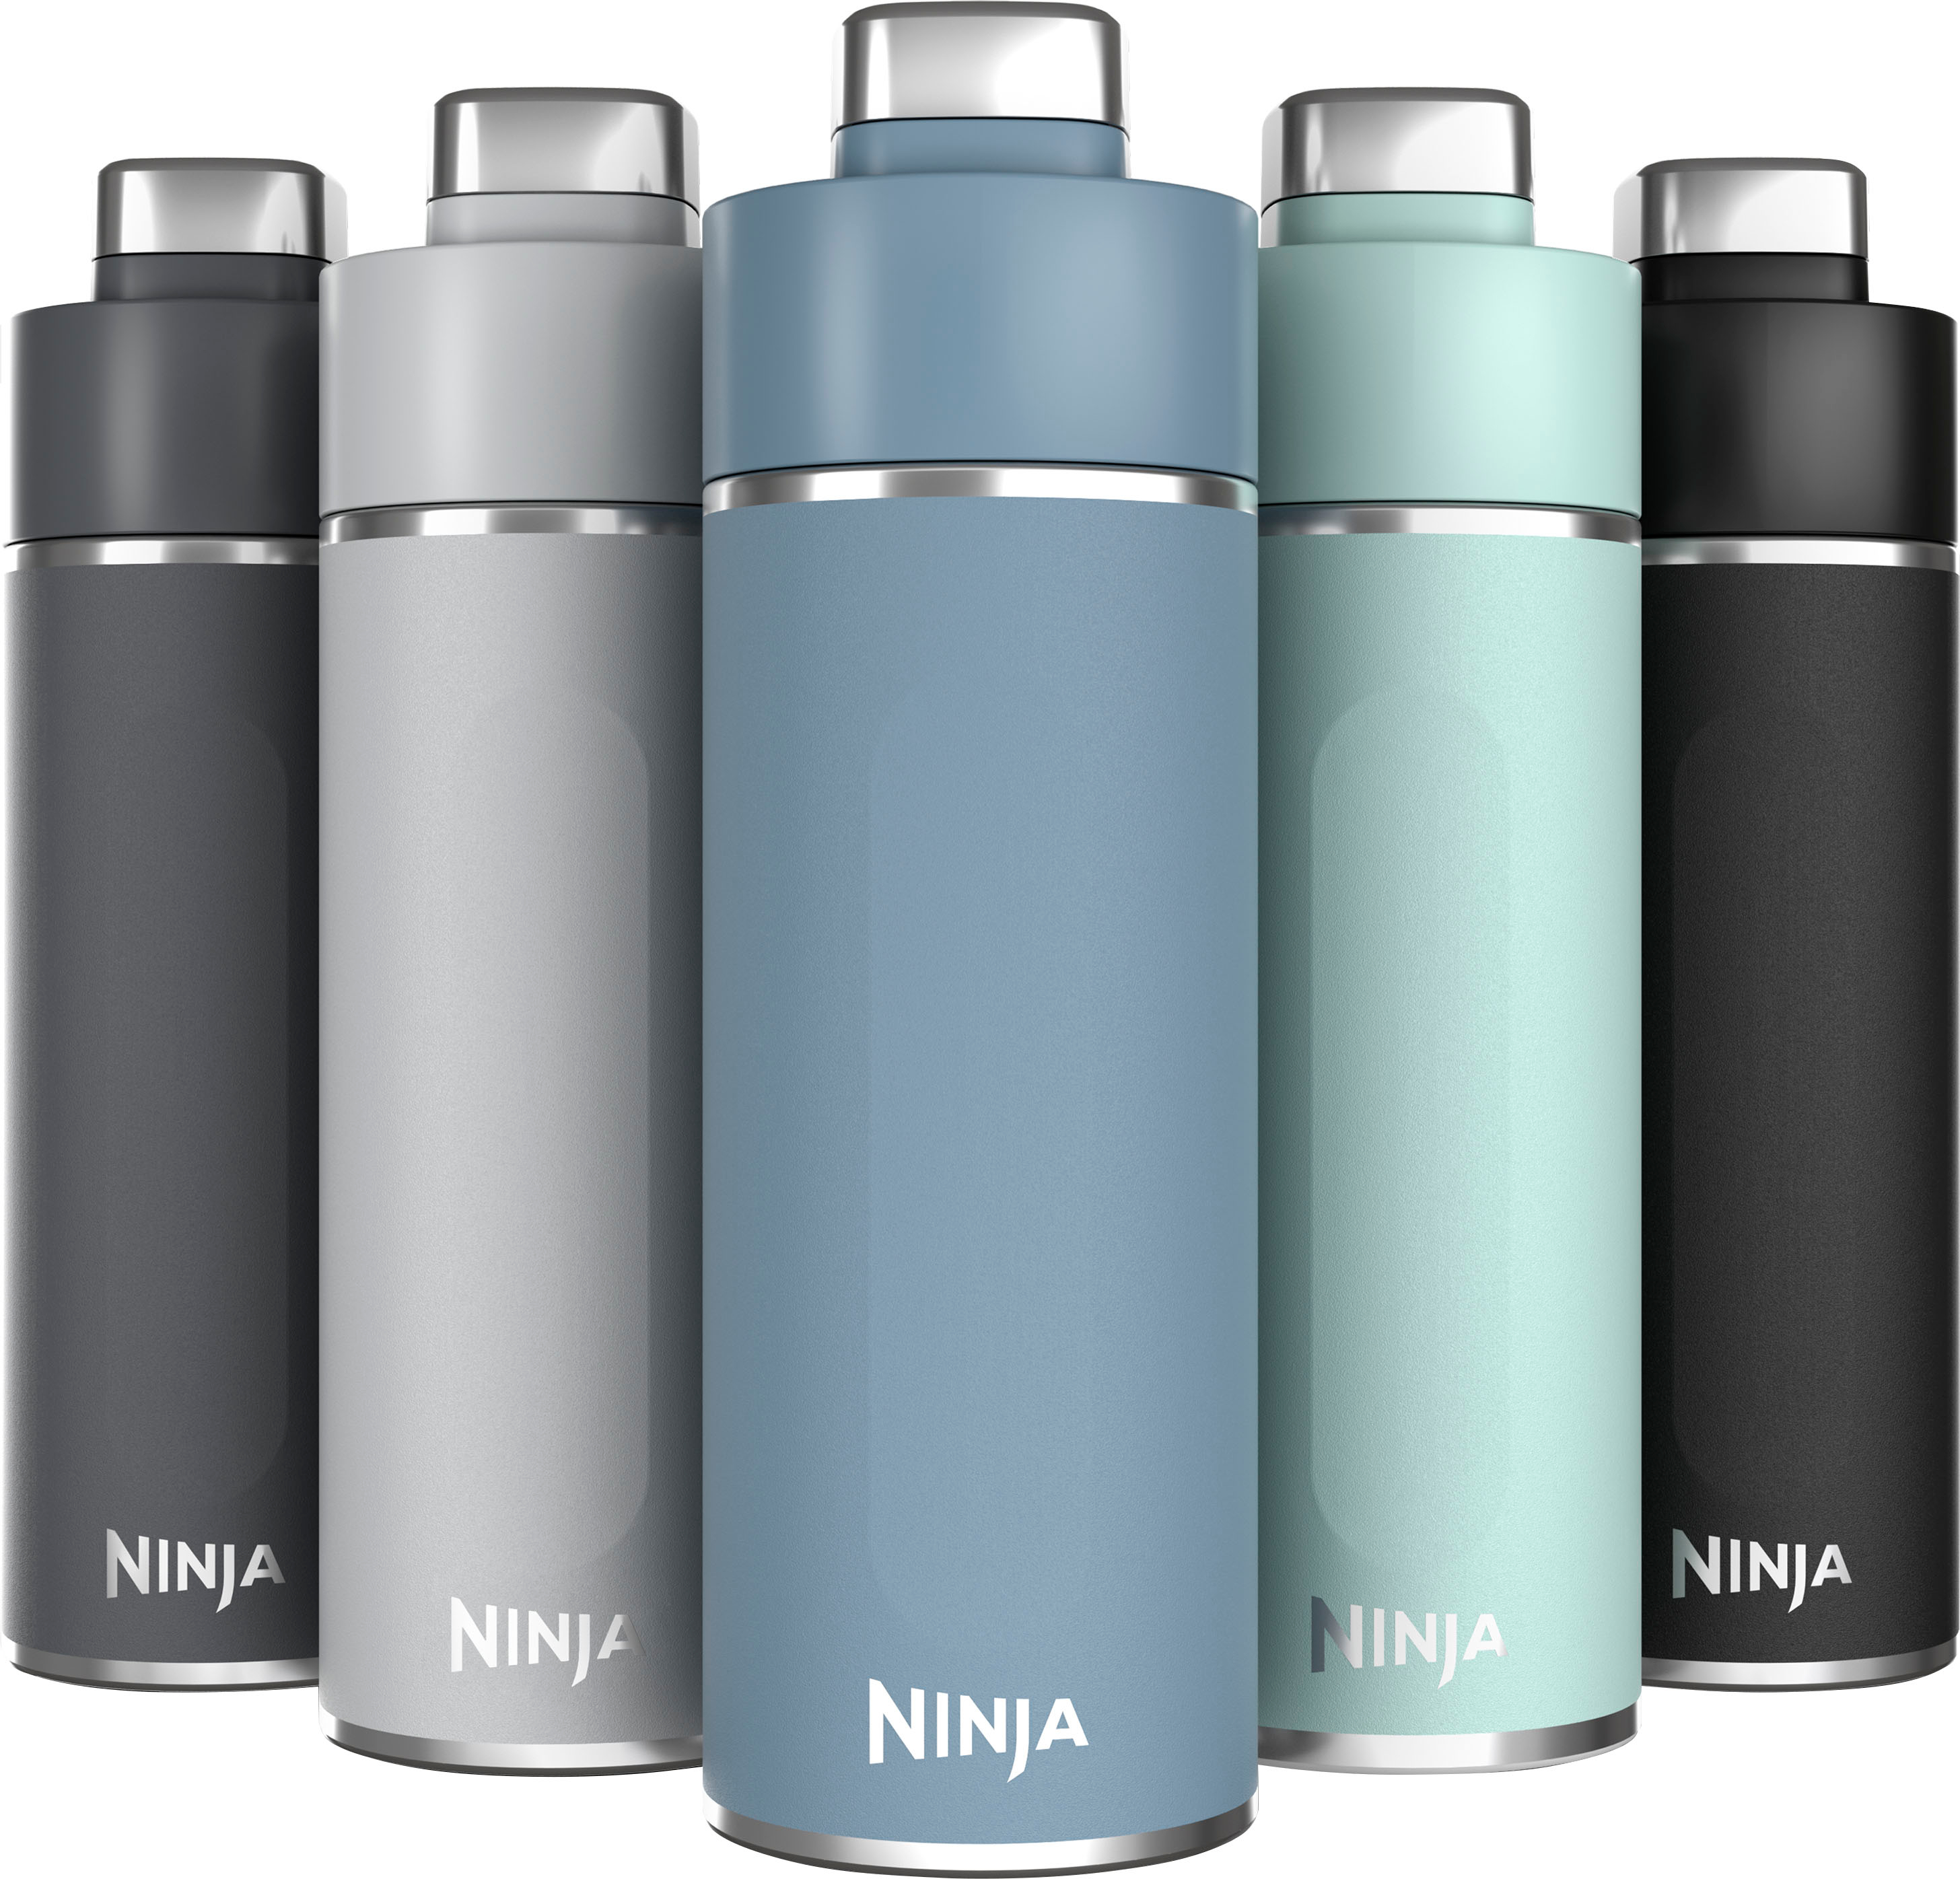 Ninja Thirsti Travel Bottle 24 oz Black - DW2401BK